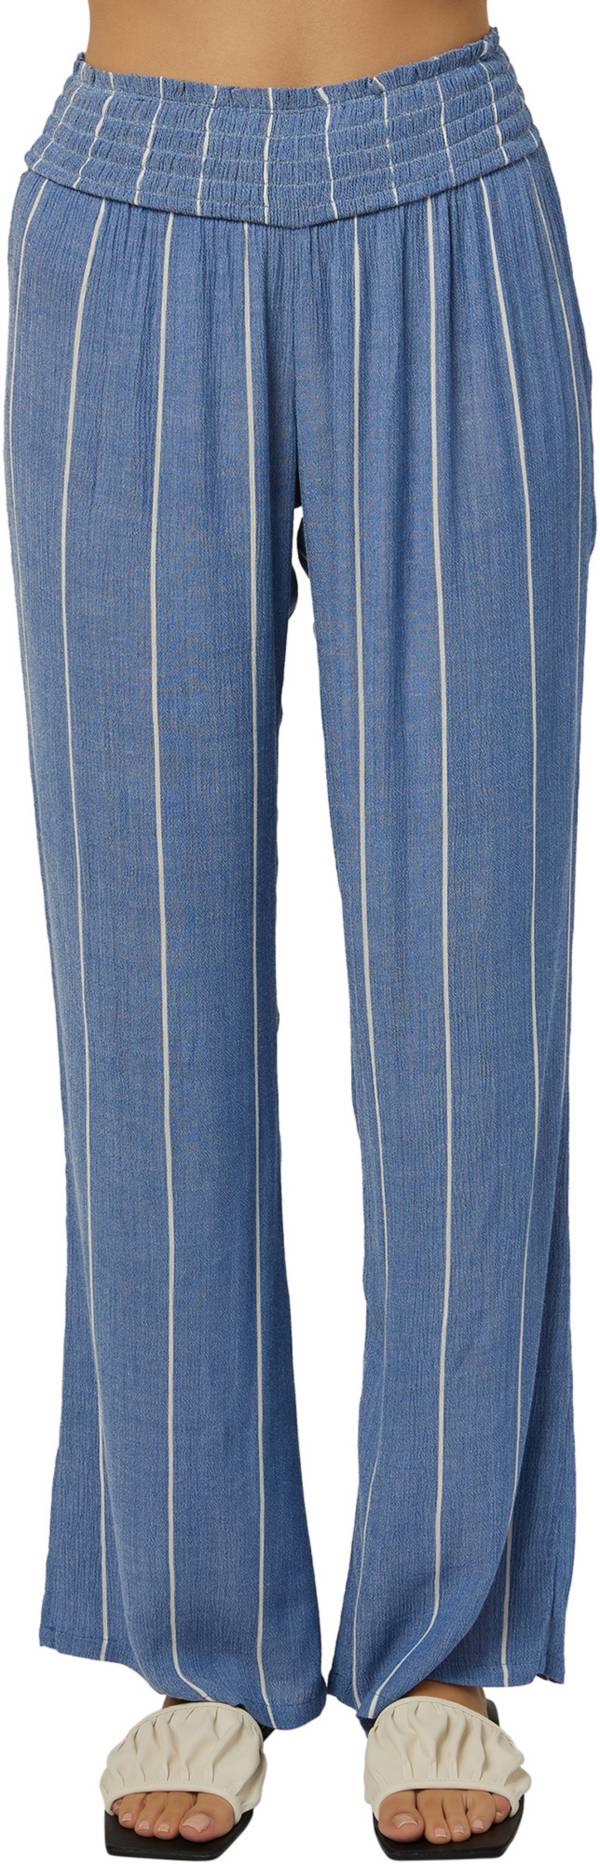 O'Neill Women's Johnny Stripe Pants product image